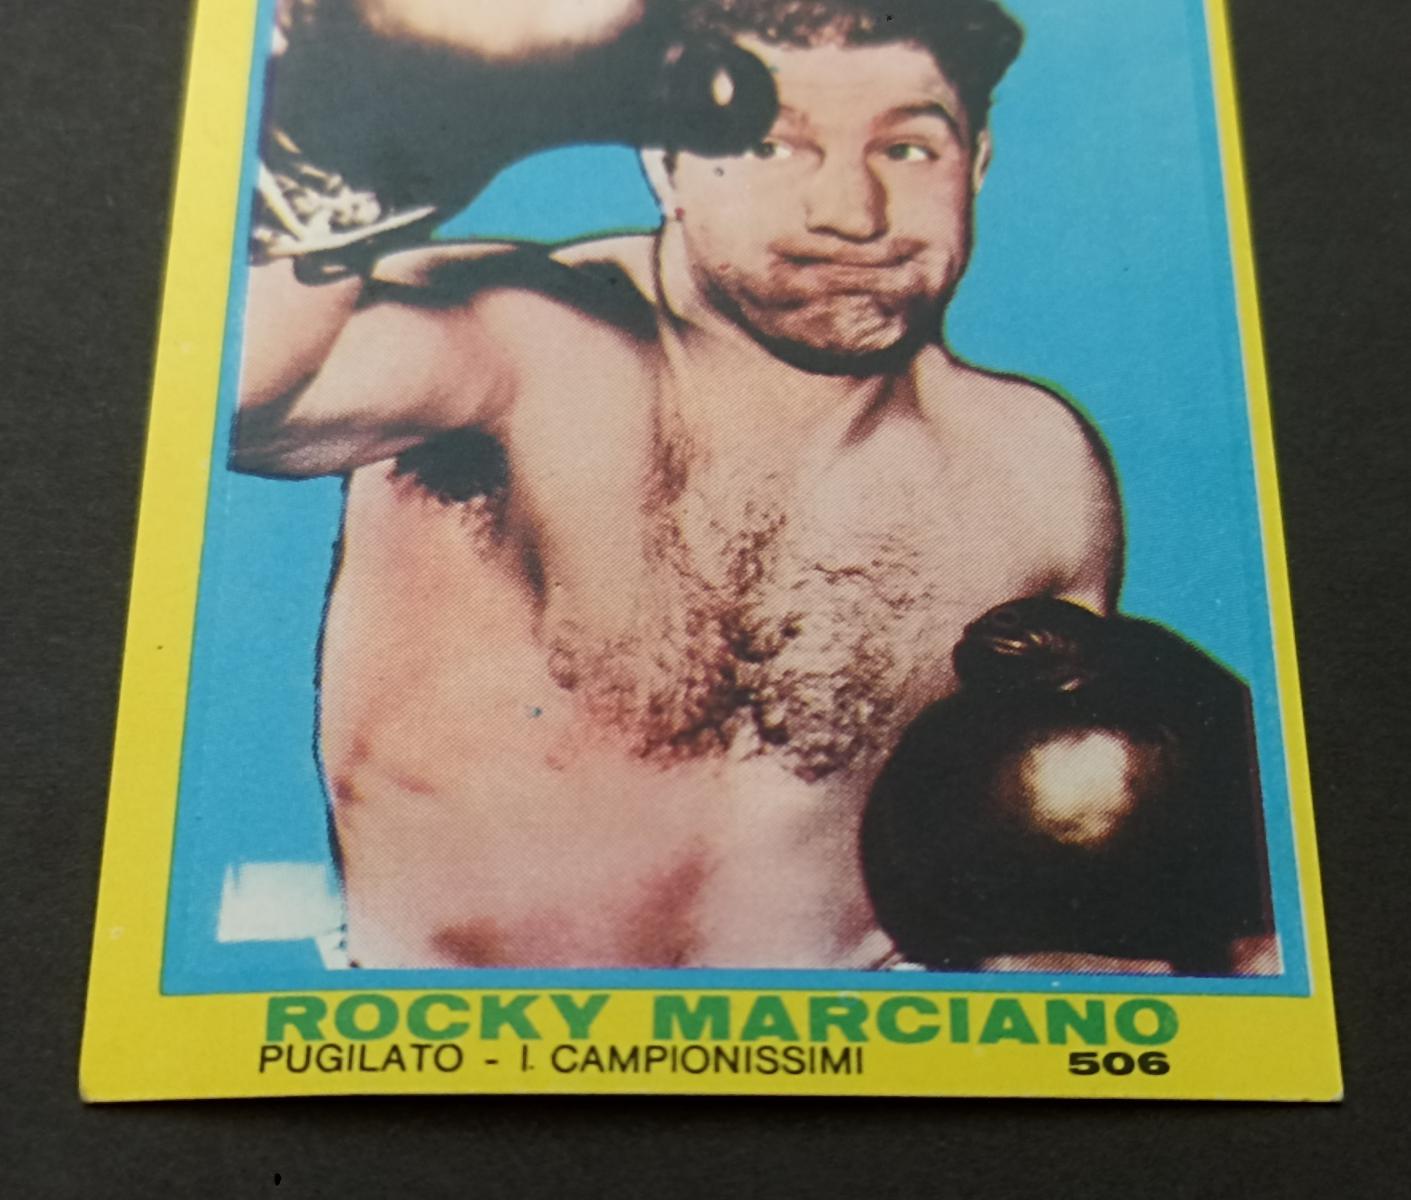 BOXING CARD - MIRA - CAMPIONISSIMI TUTTOSPORT 1968 - ROCKY MARCIANO - 506 - MINT